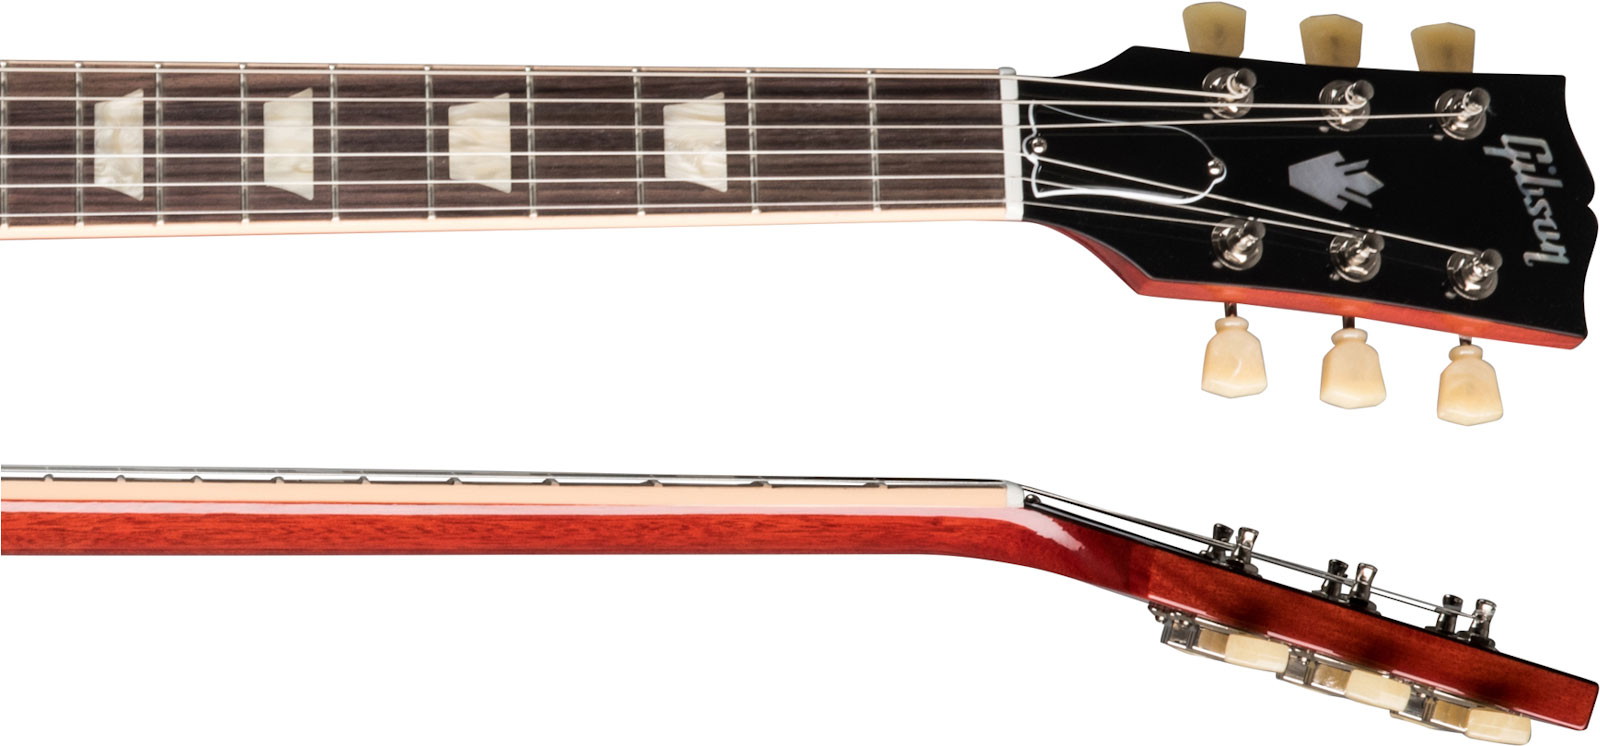 Gibson Sg Standard '61 Maestro Vibrola Original 2h Trem Rw - Guitarra electrica retro rock - Variation 2